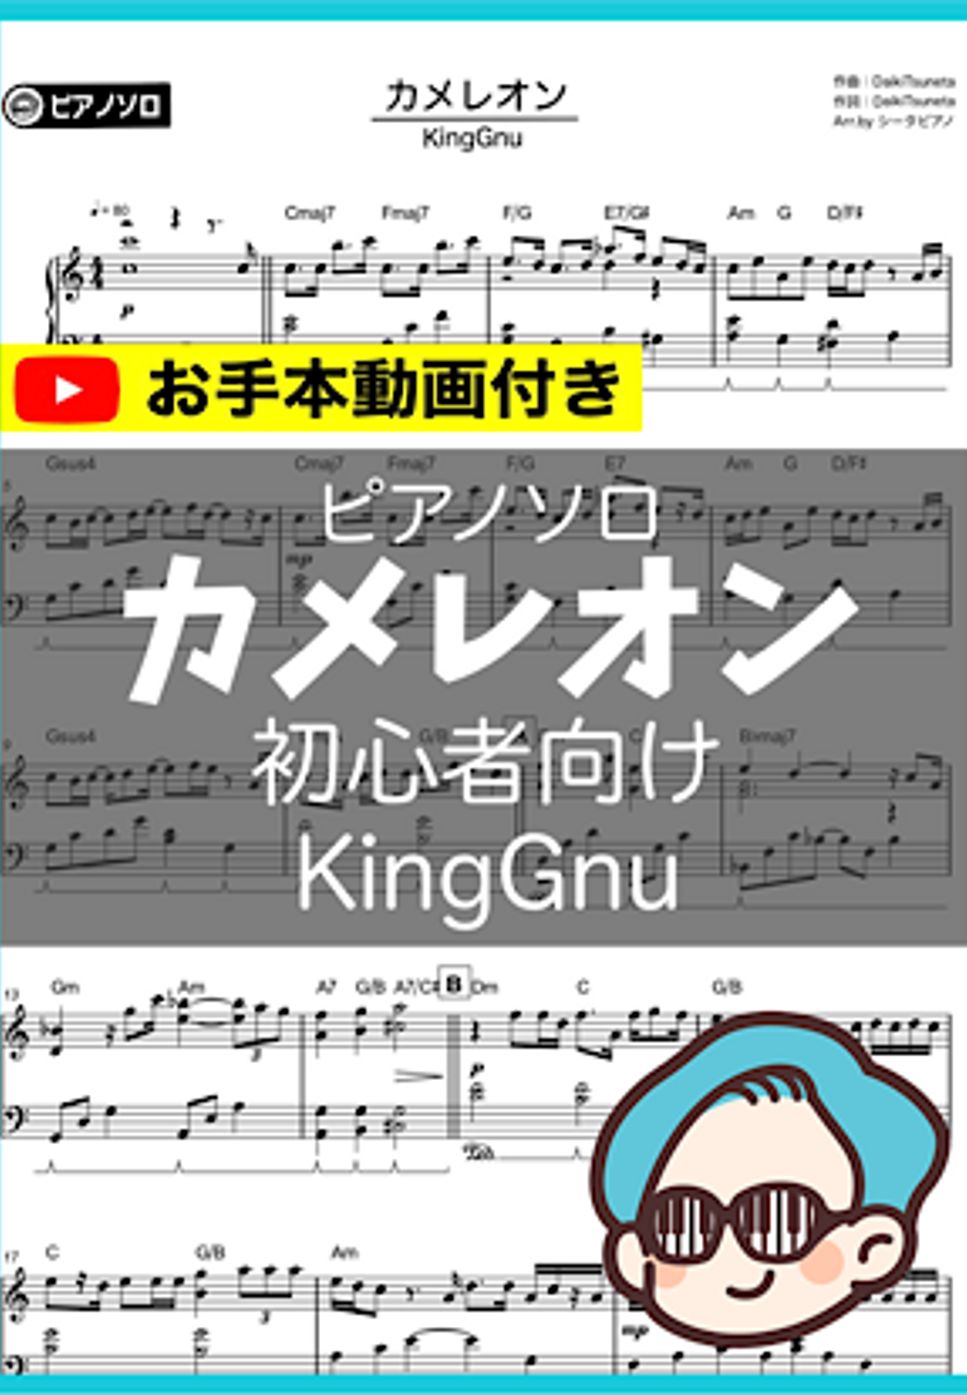 KingGnu - カメレオン(初級) by シータピアノ